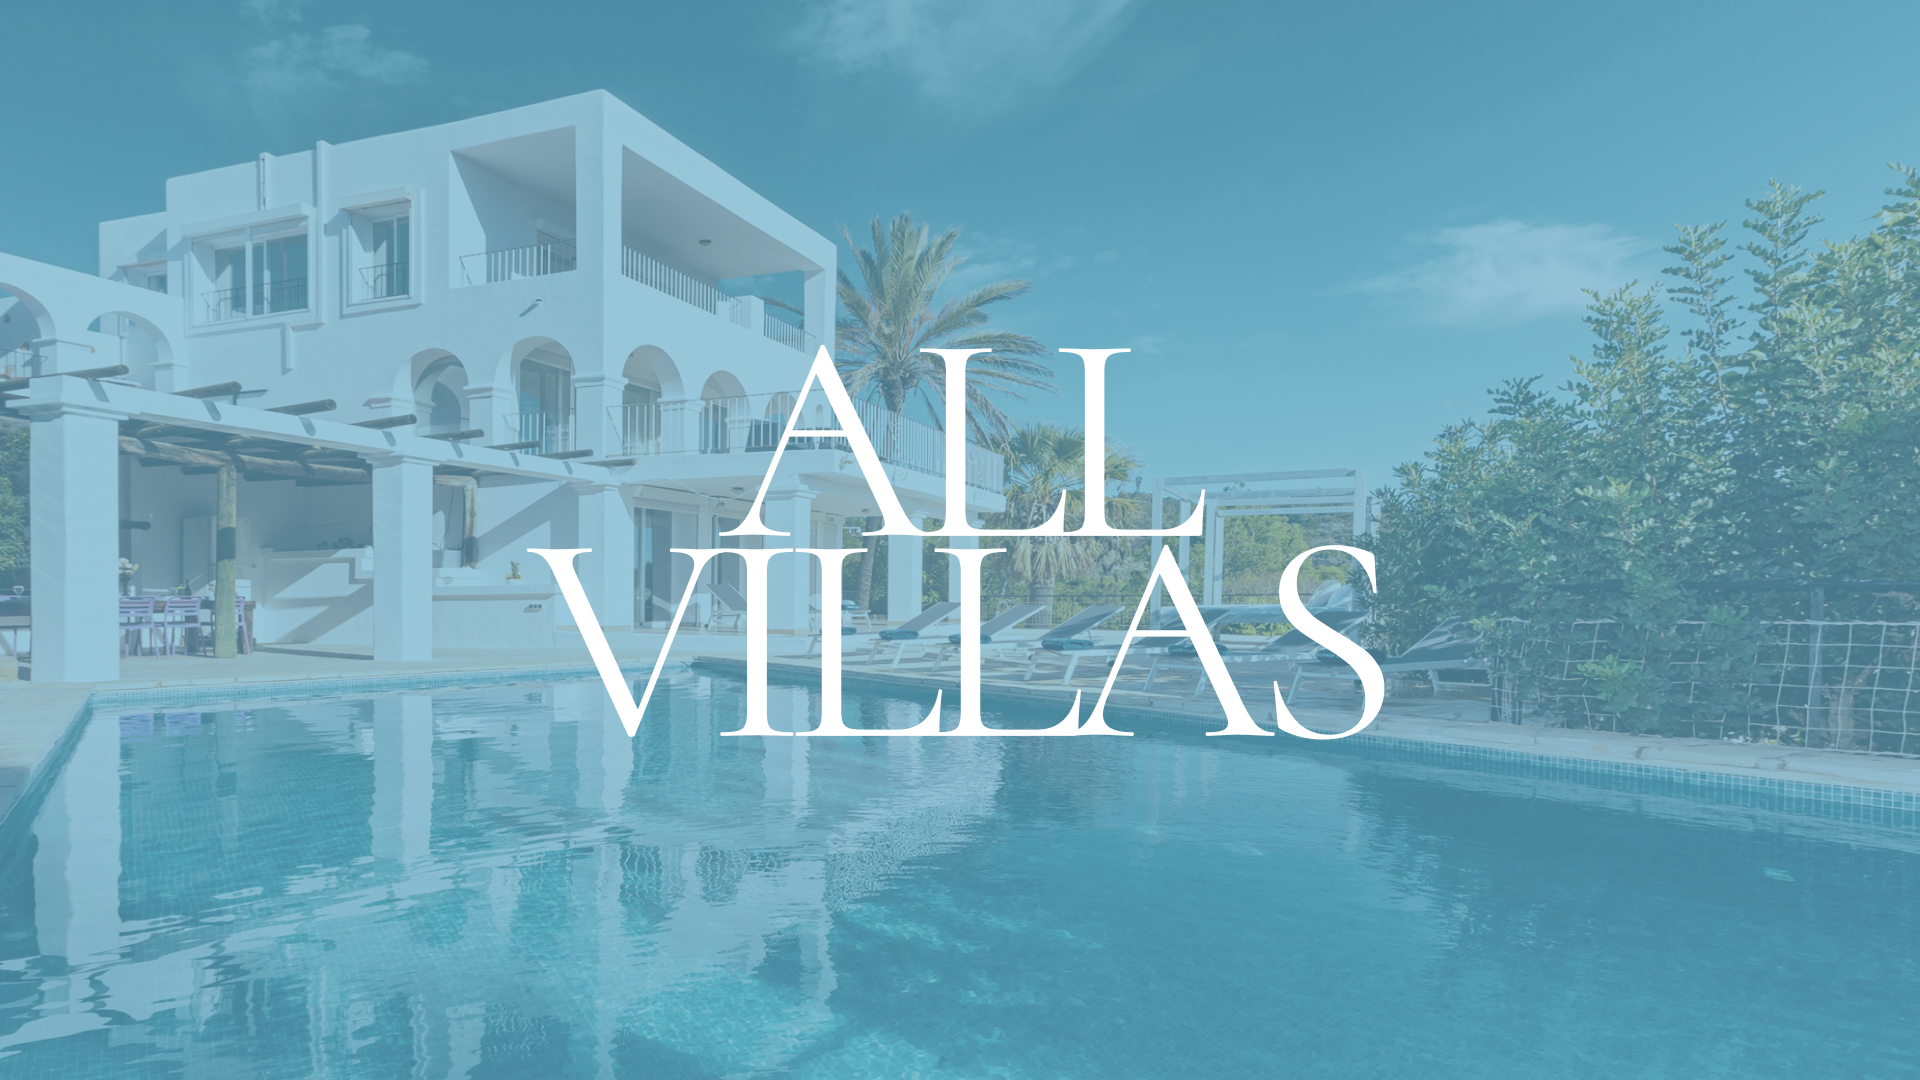 View all villas